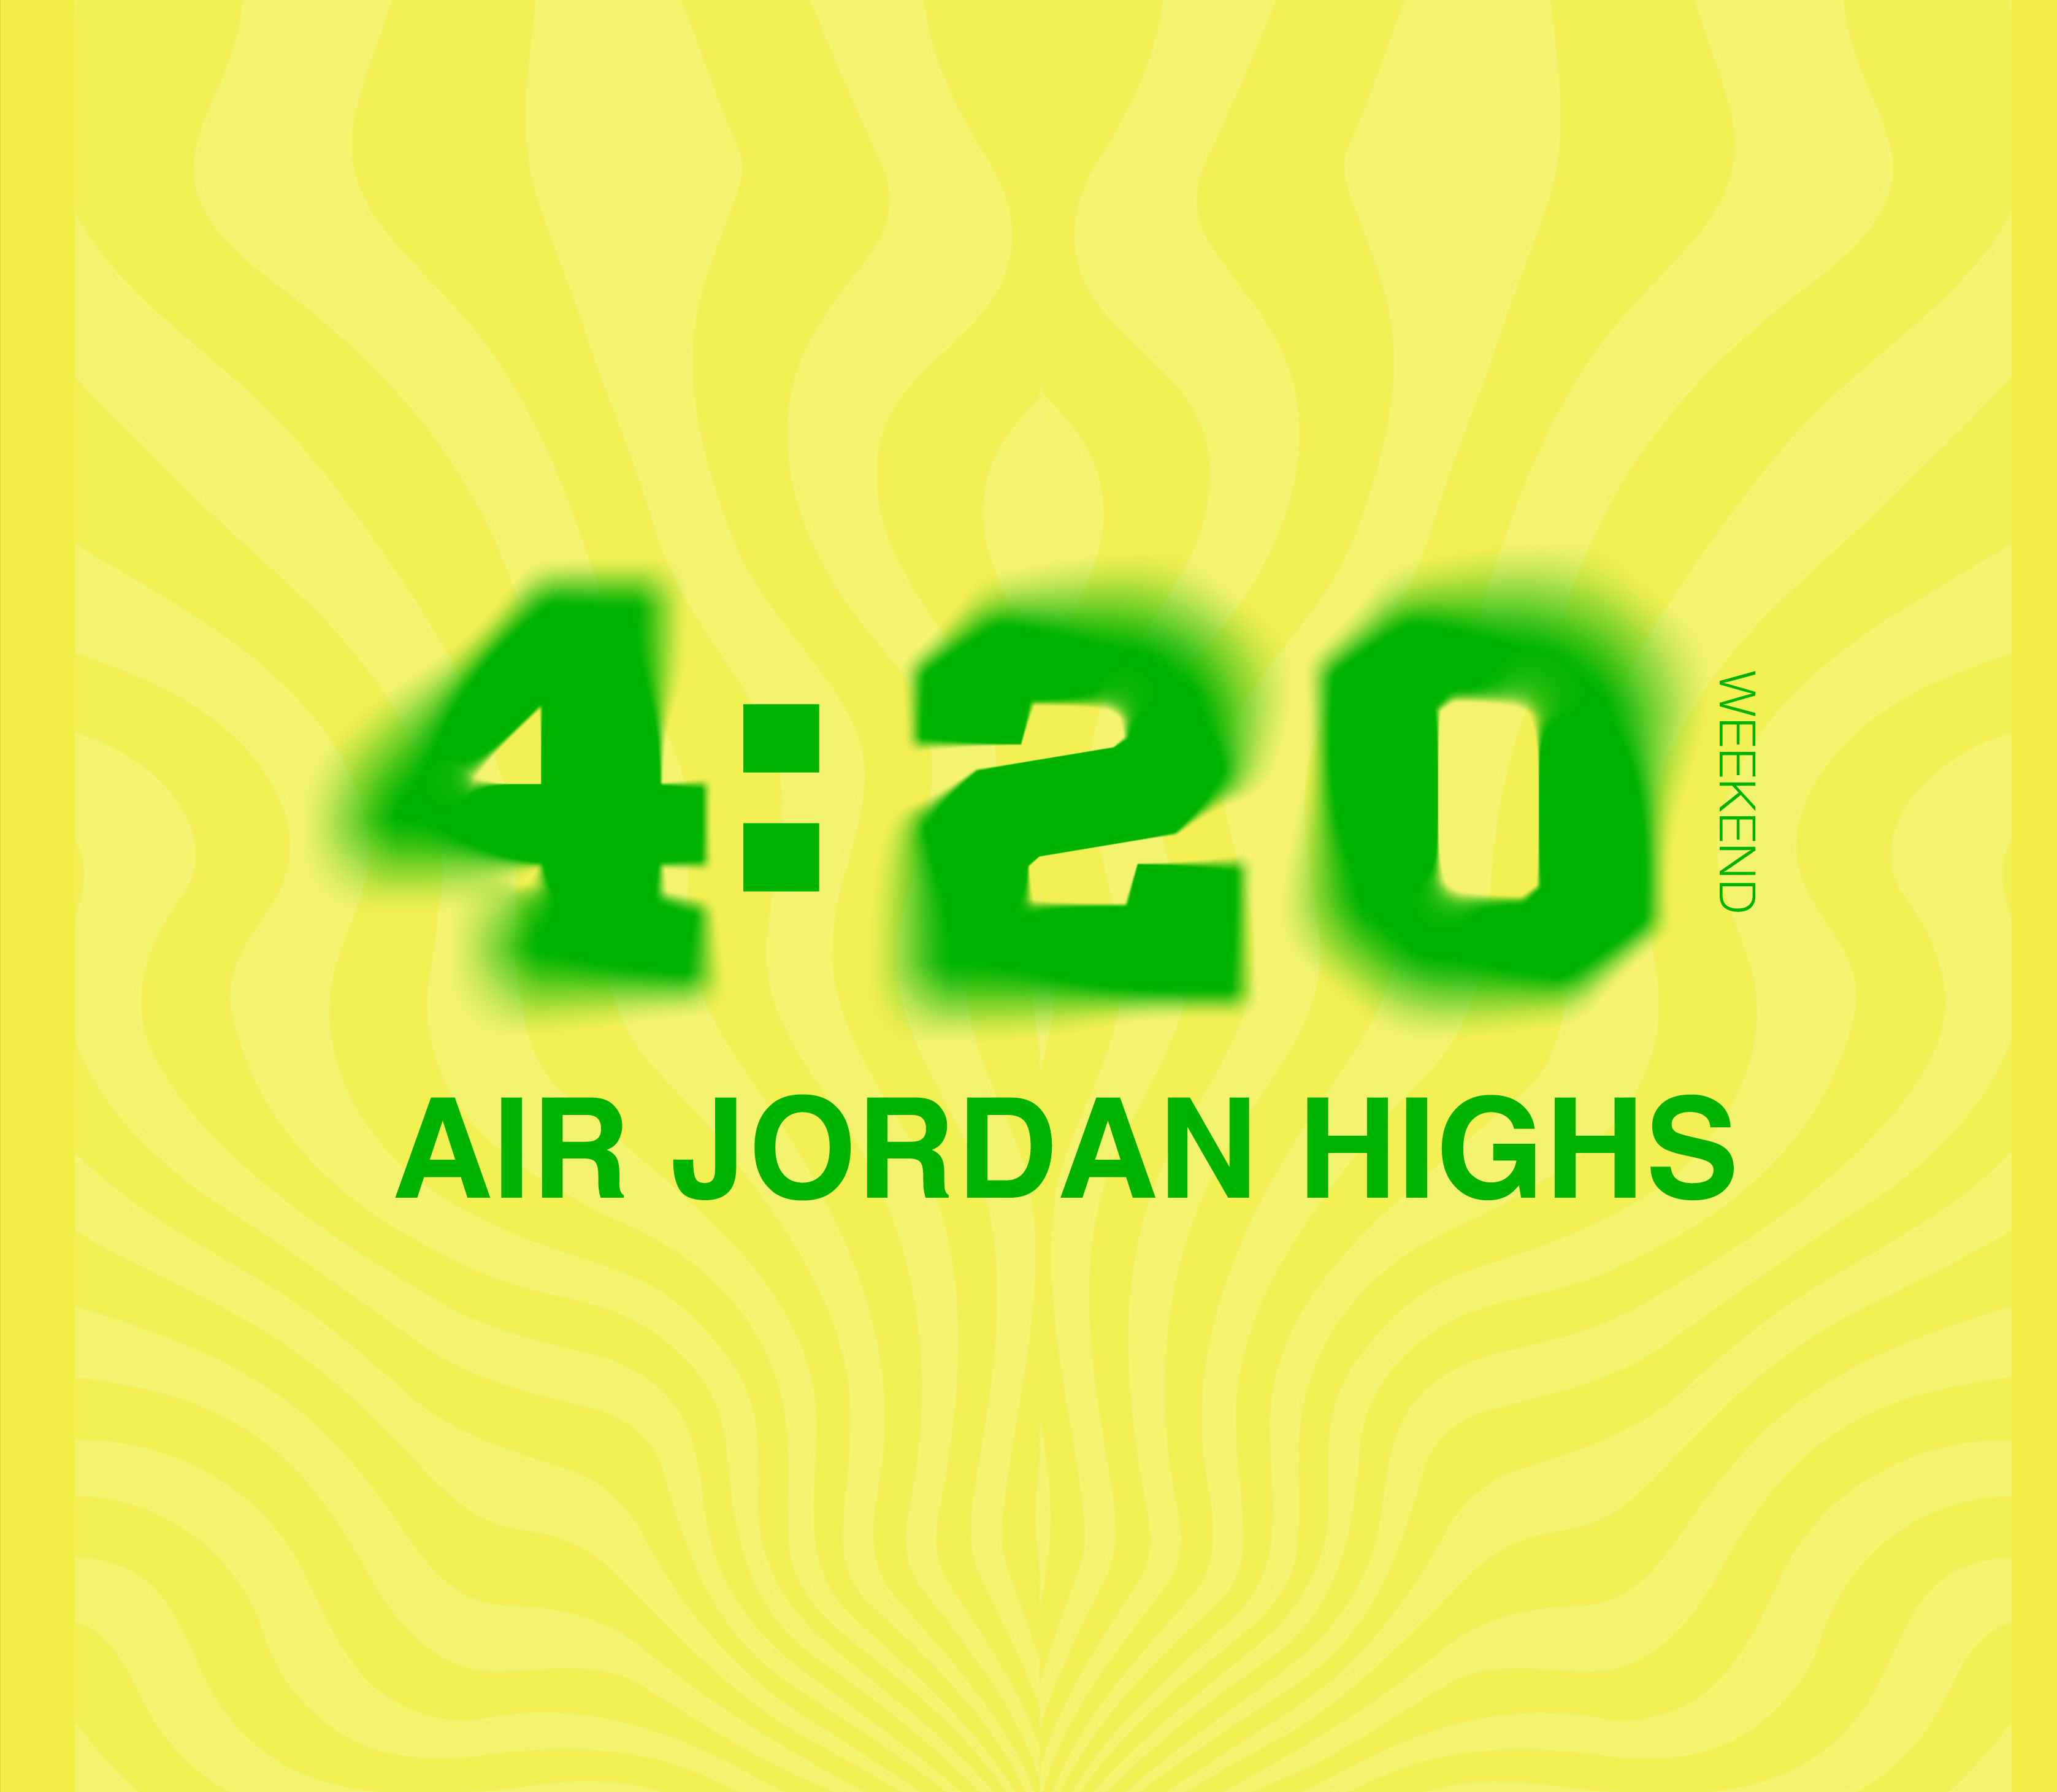 420 AIR JORDAN HIGHS